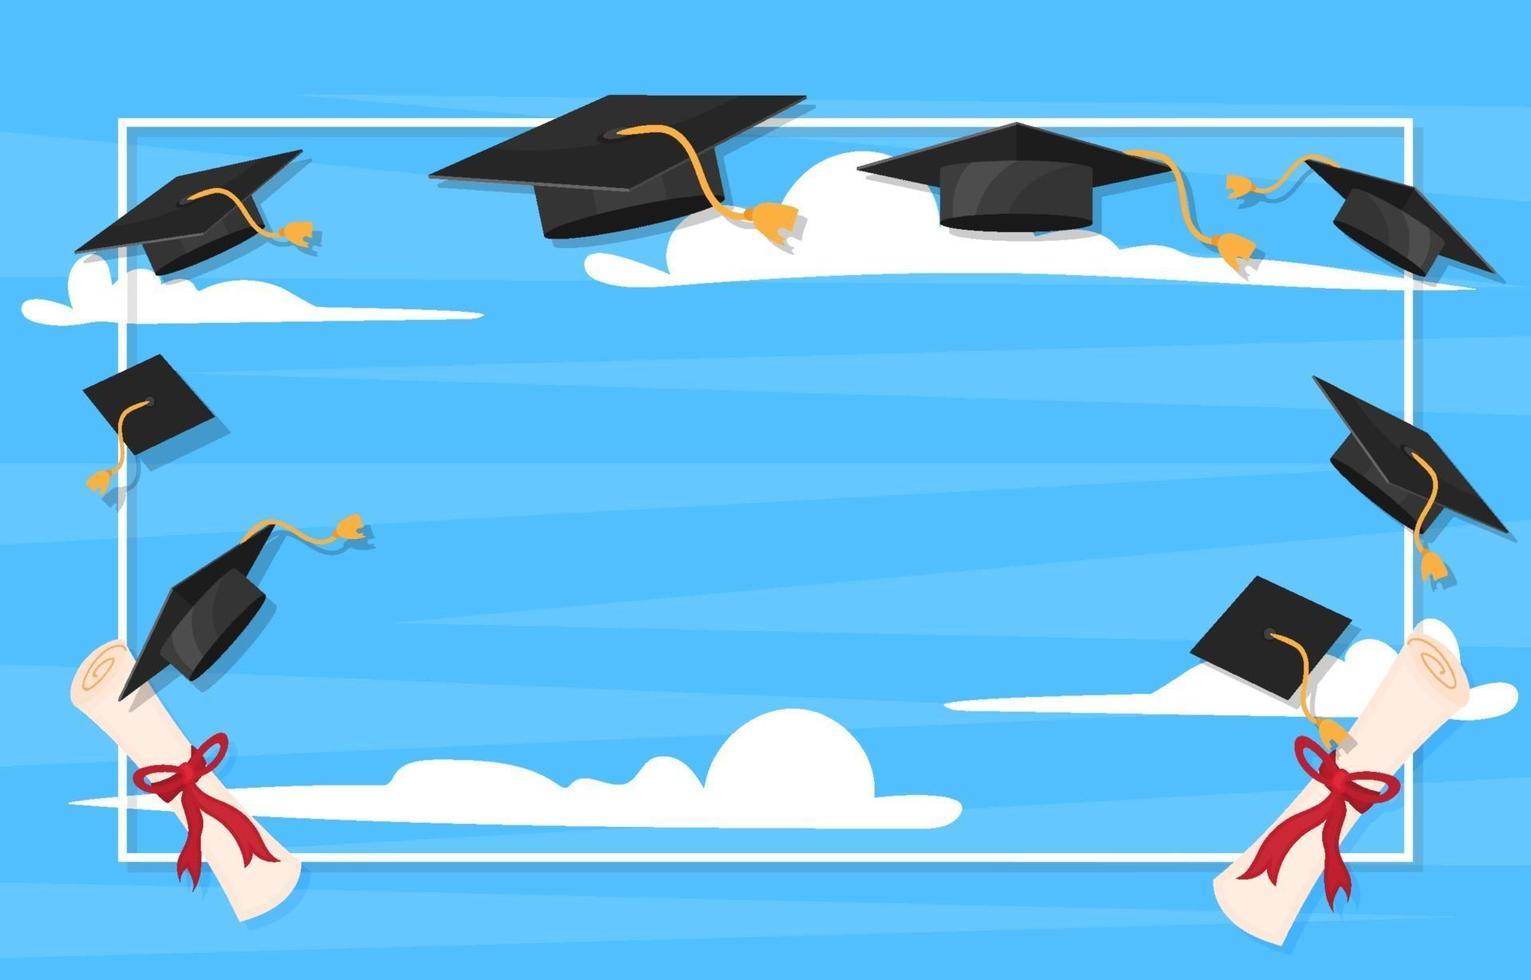 Graduation Frame with Graduation Cap vector